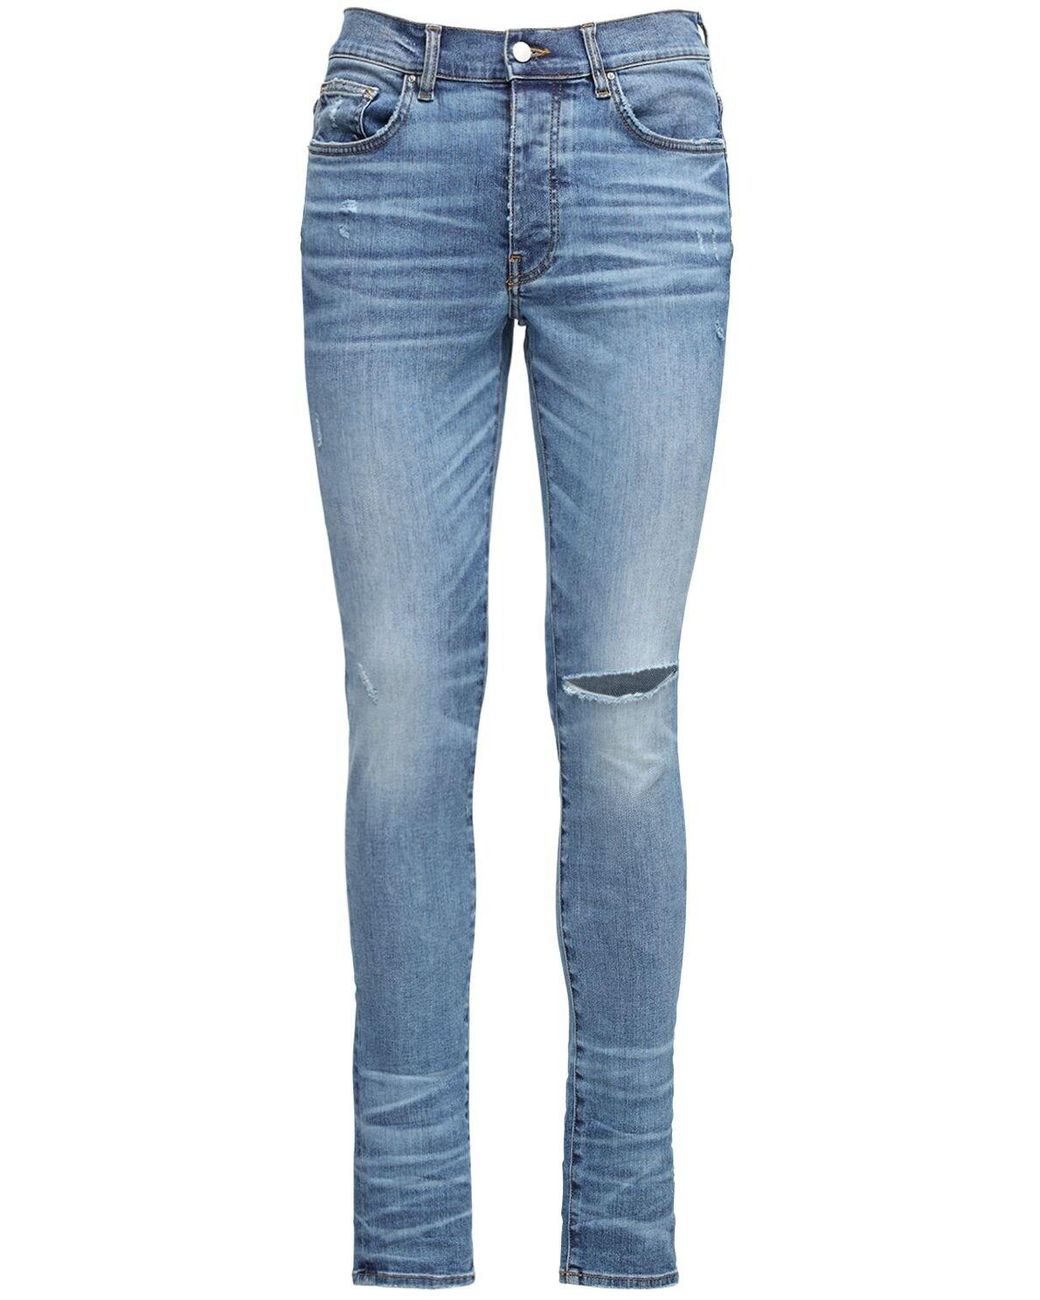 Amiri Slit Knee Cotton Denim Jeans in Blue for Men - Lyst